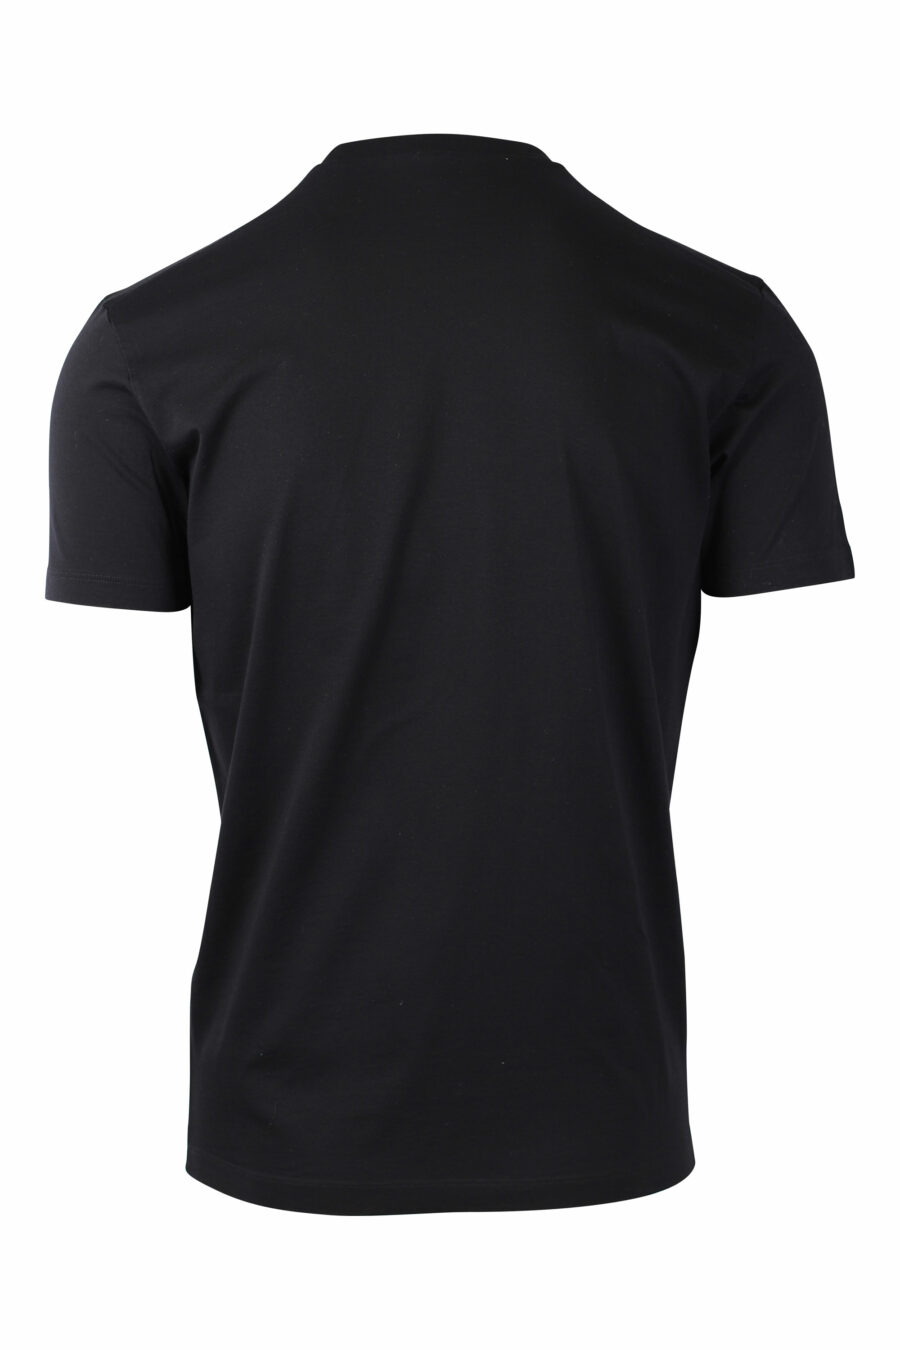 T-shirt noir avec maxilogo leaf surfing - IMG 1463